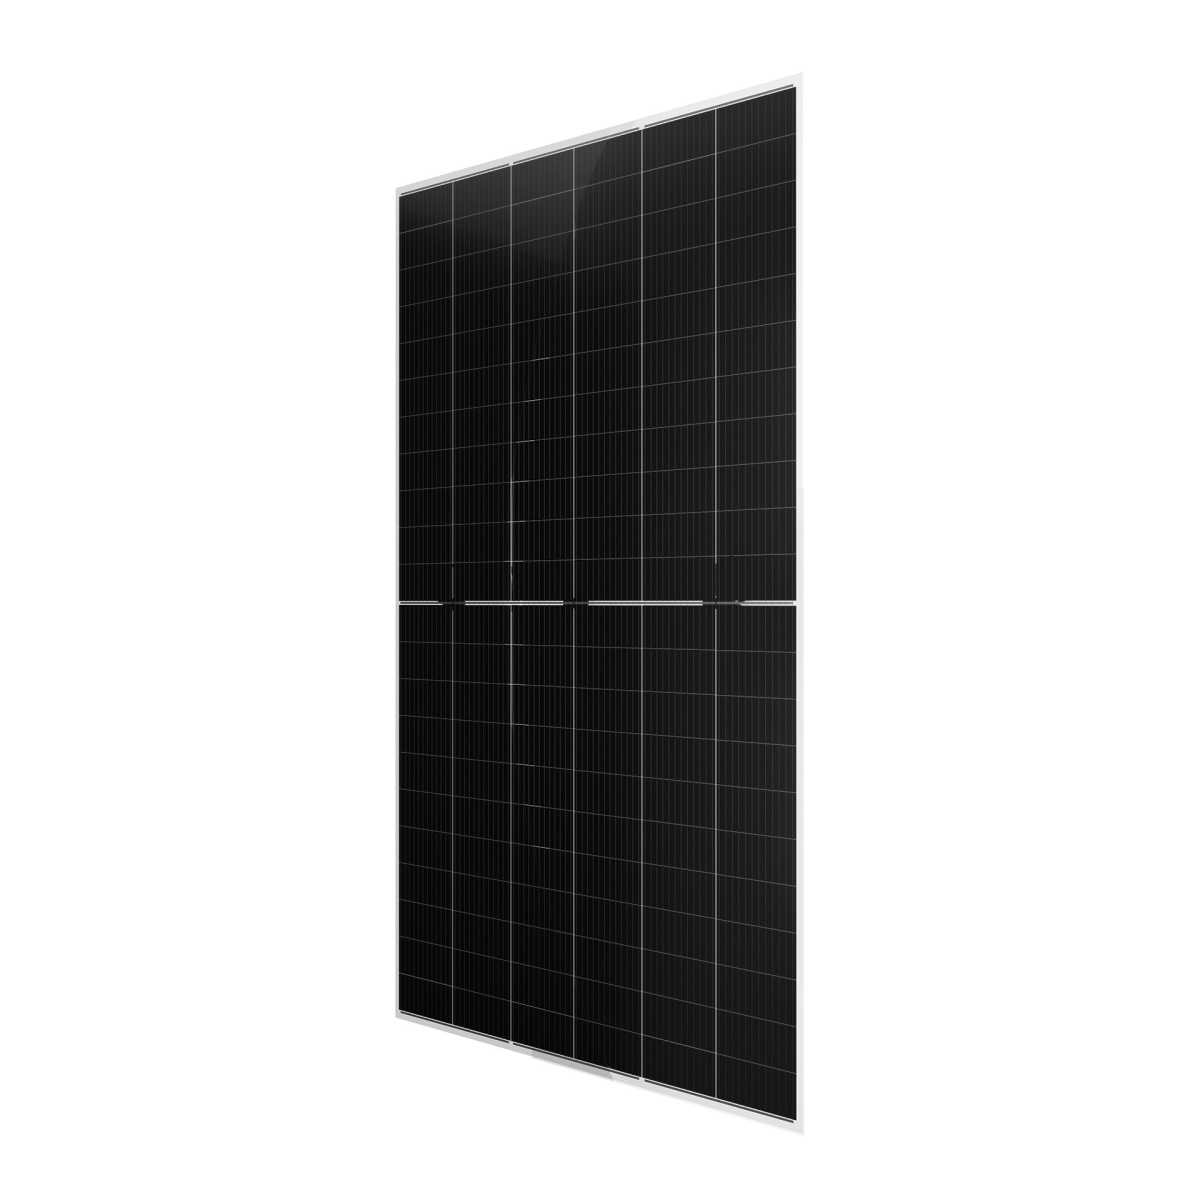 TommaTech 670Wp M12 132PM Cells Bifacial G2G Half-Cut MB Solar Panel